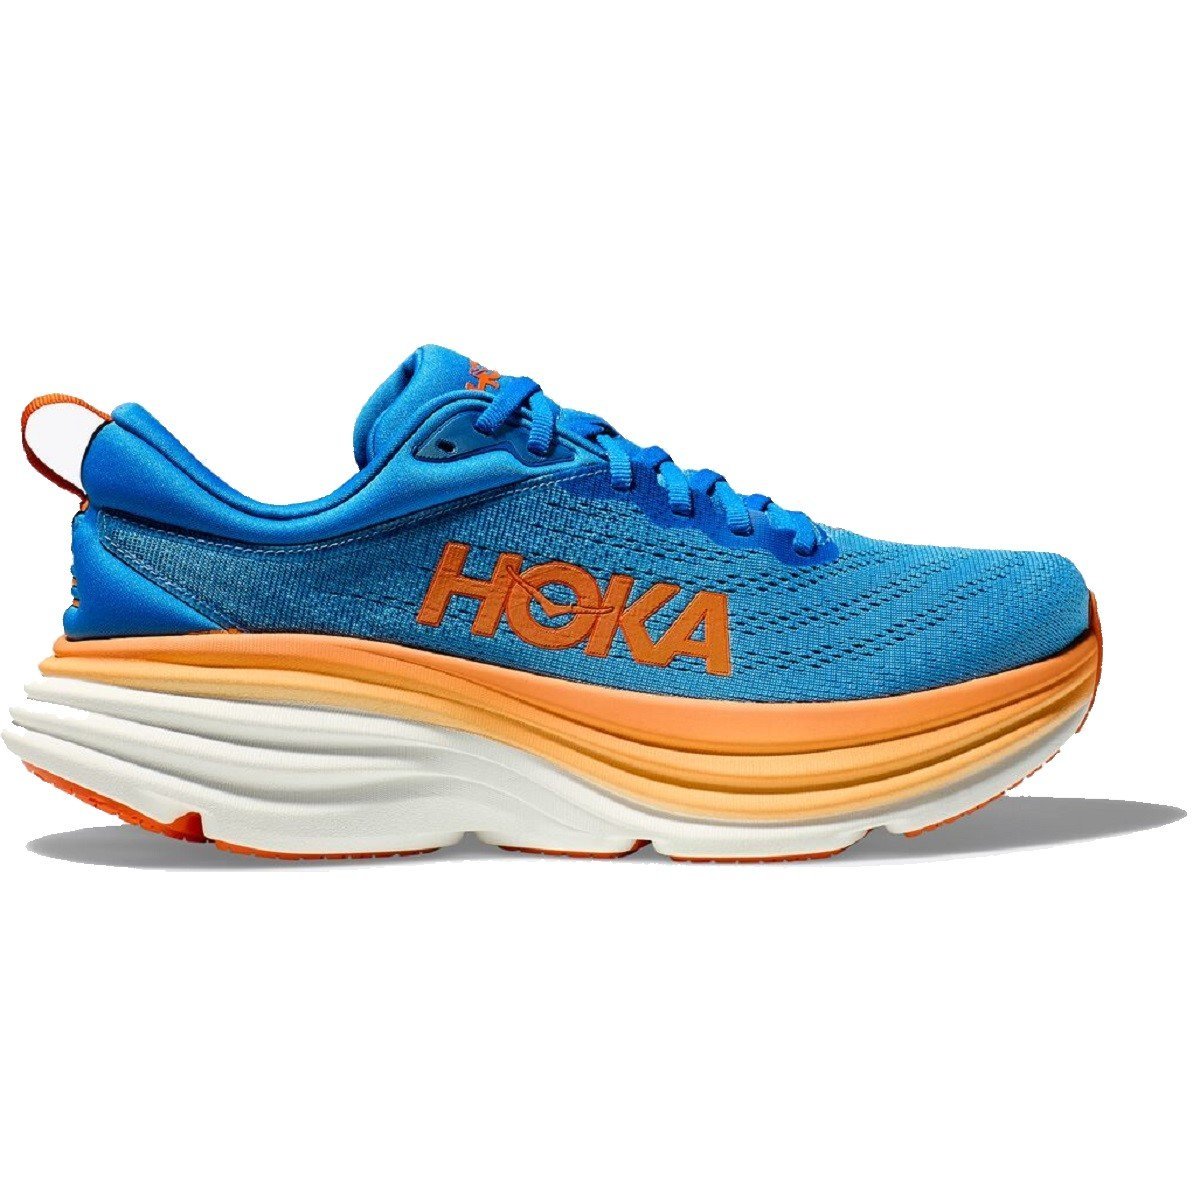 Topánky Hoka Bondi 8 M - blue/orange